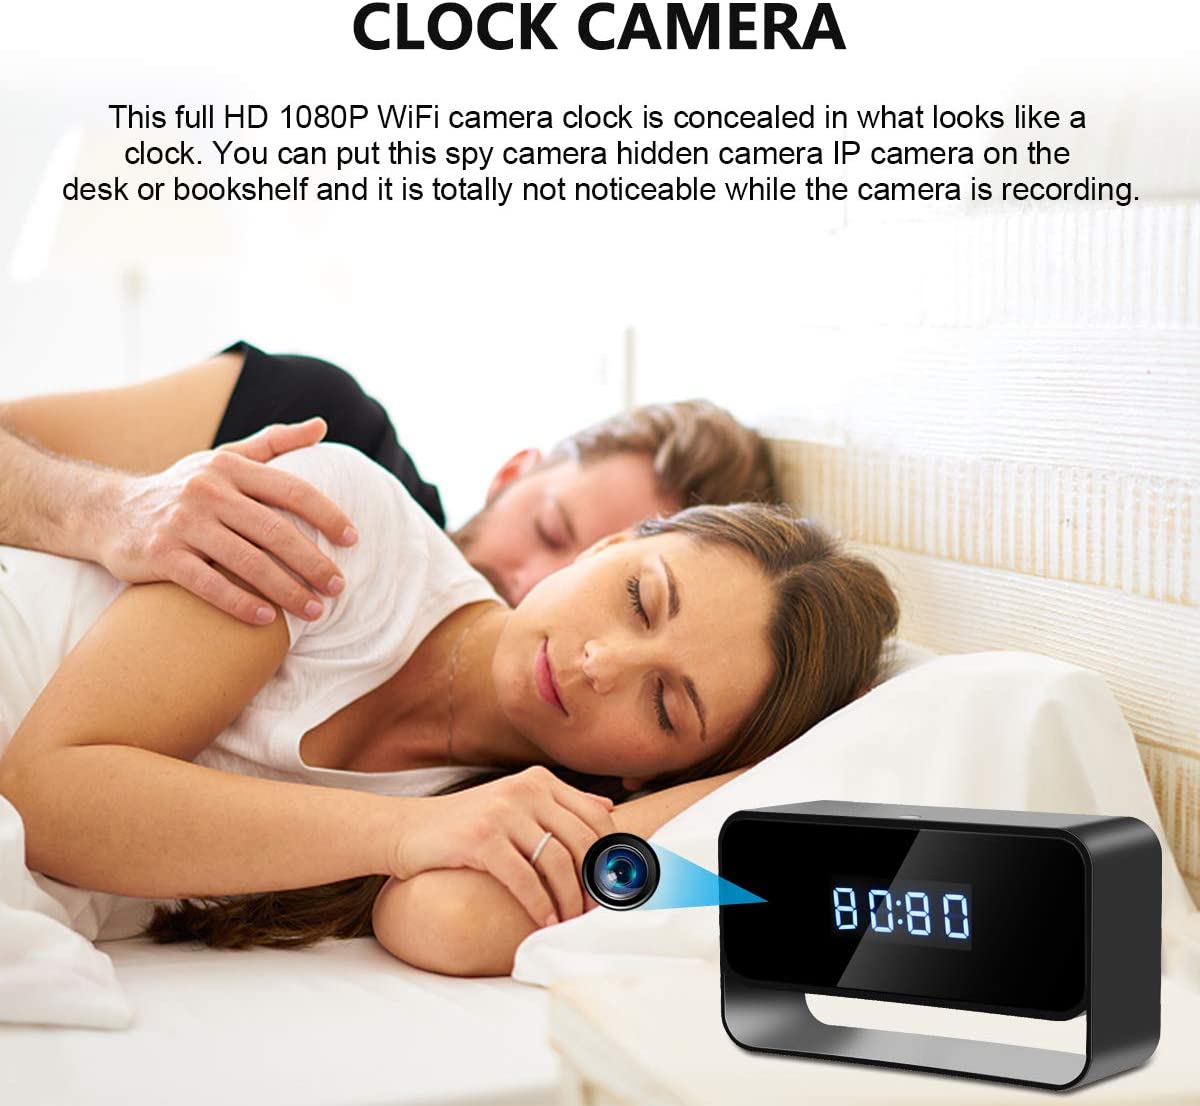 night vision camera in alarm clock